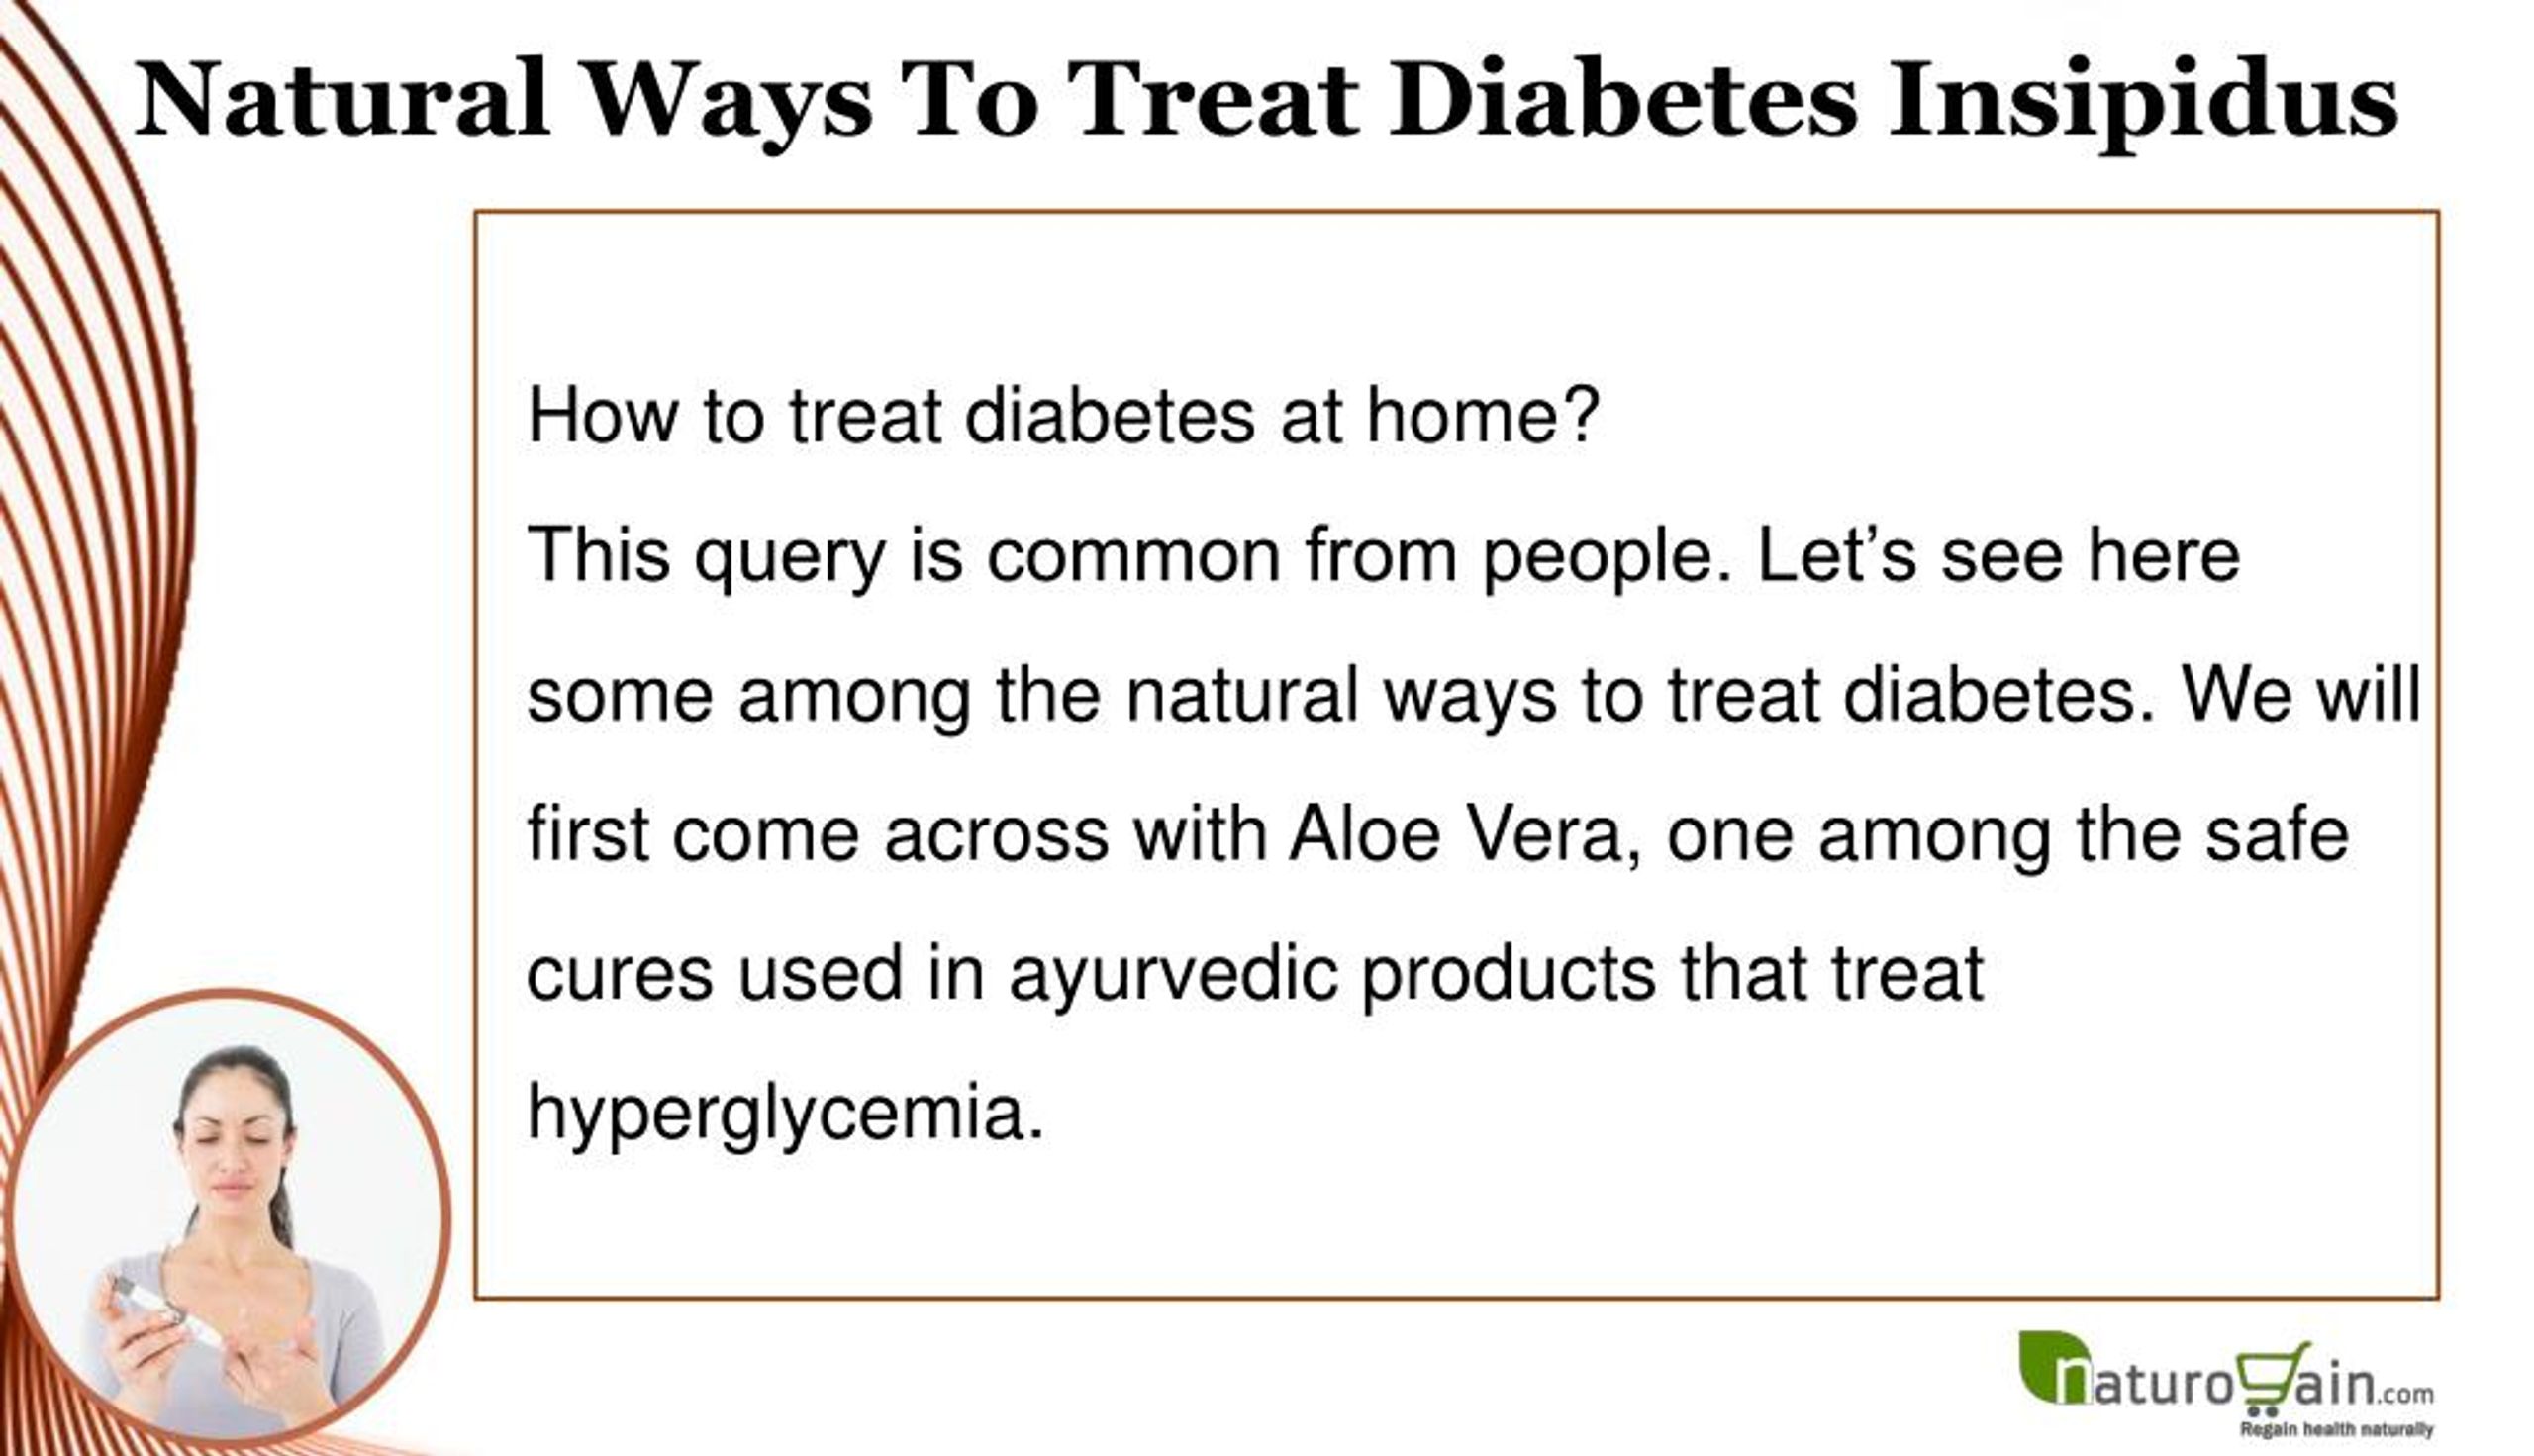 diabetes insipidus treatment at home)